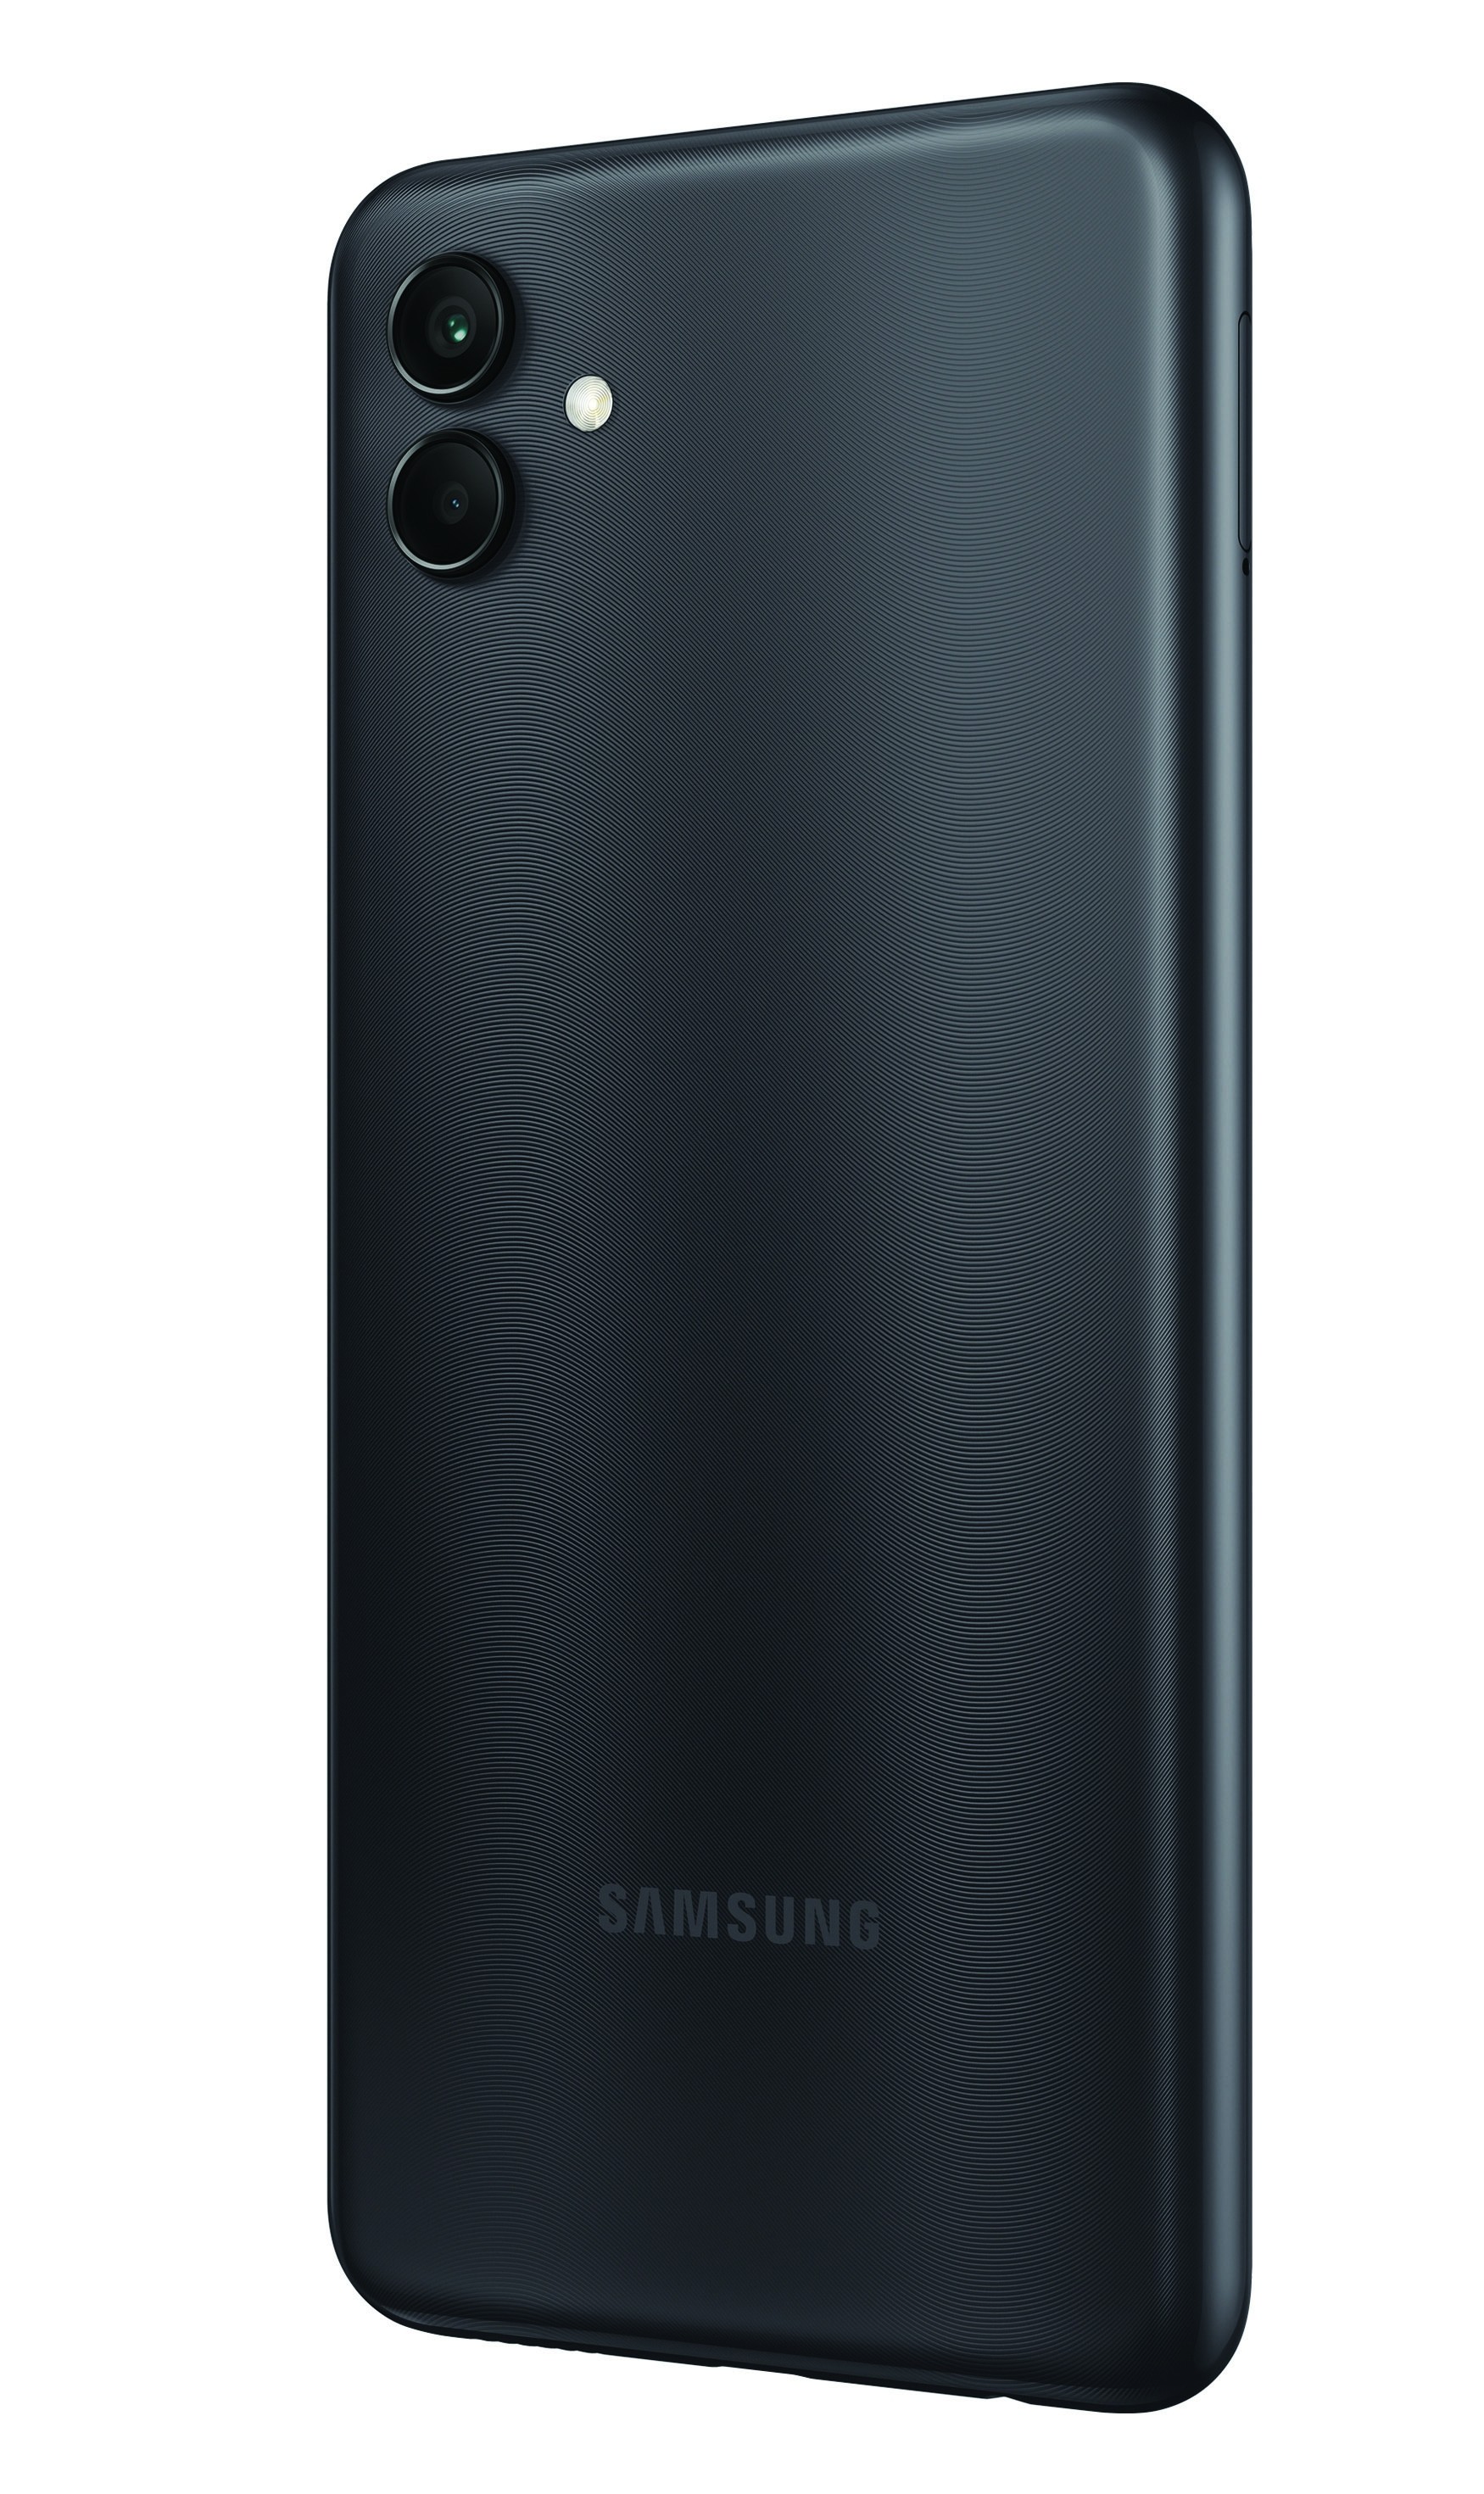 Samsung Galaxy A04 LTE (Cell C)